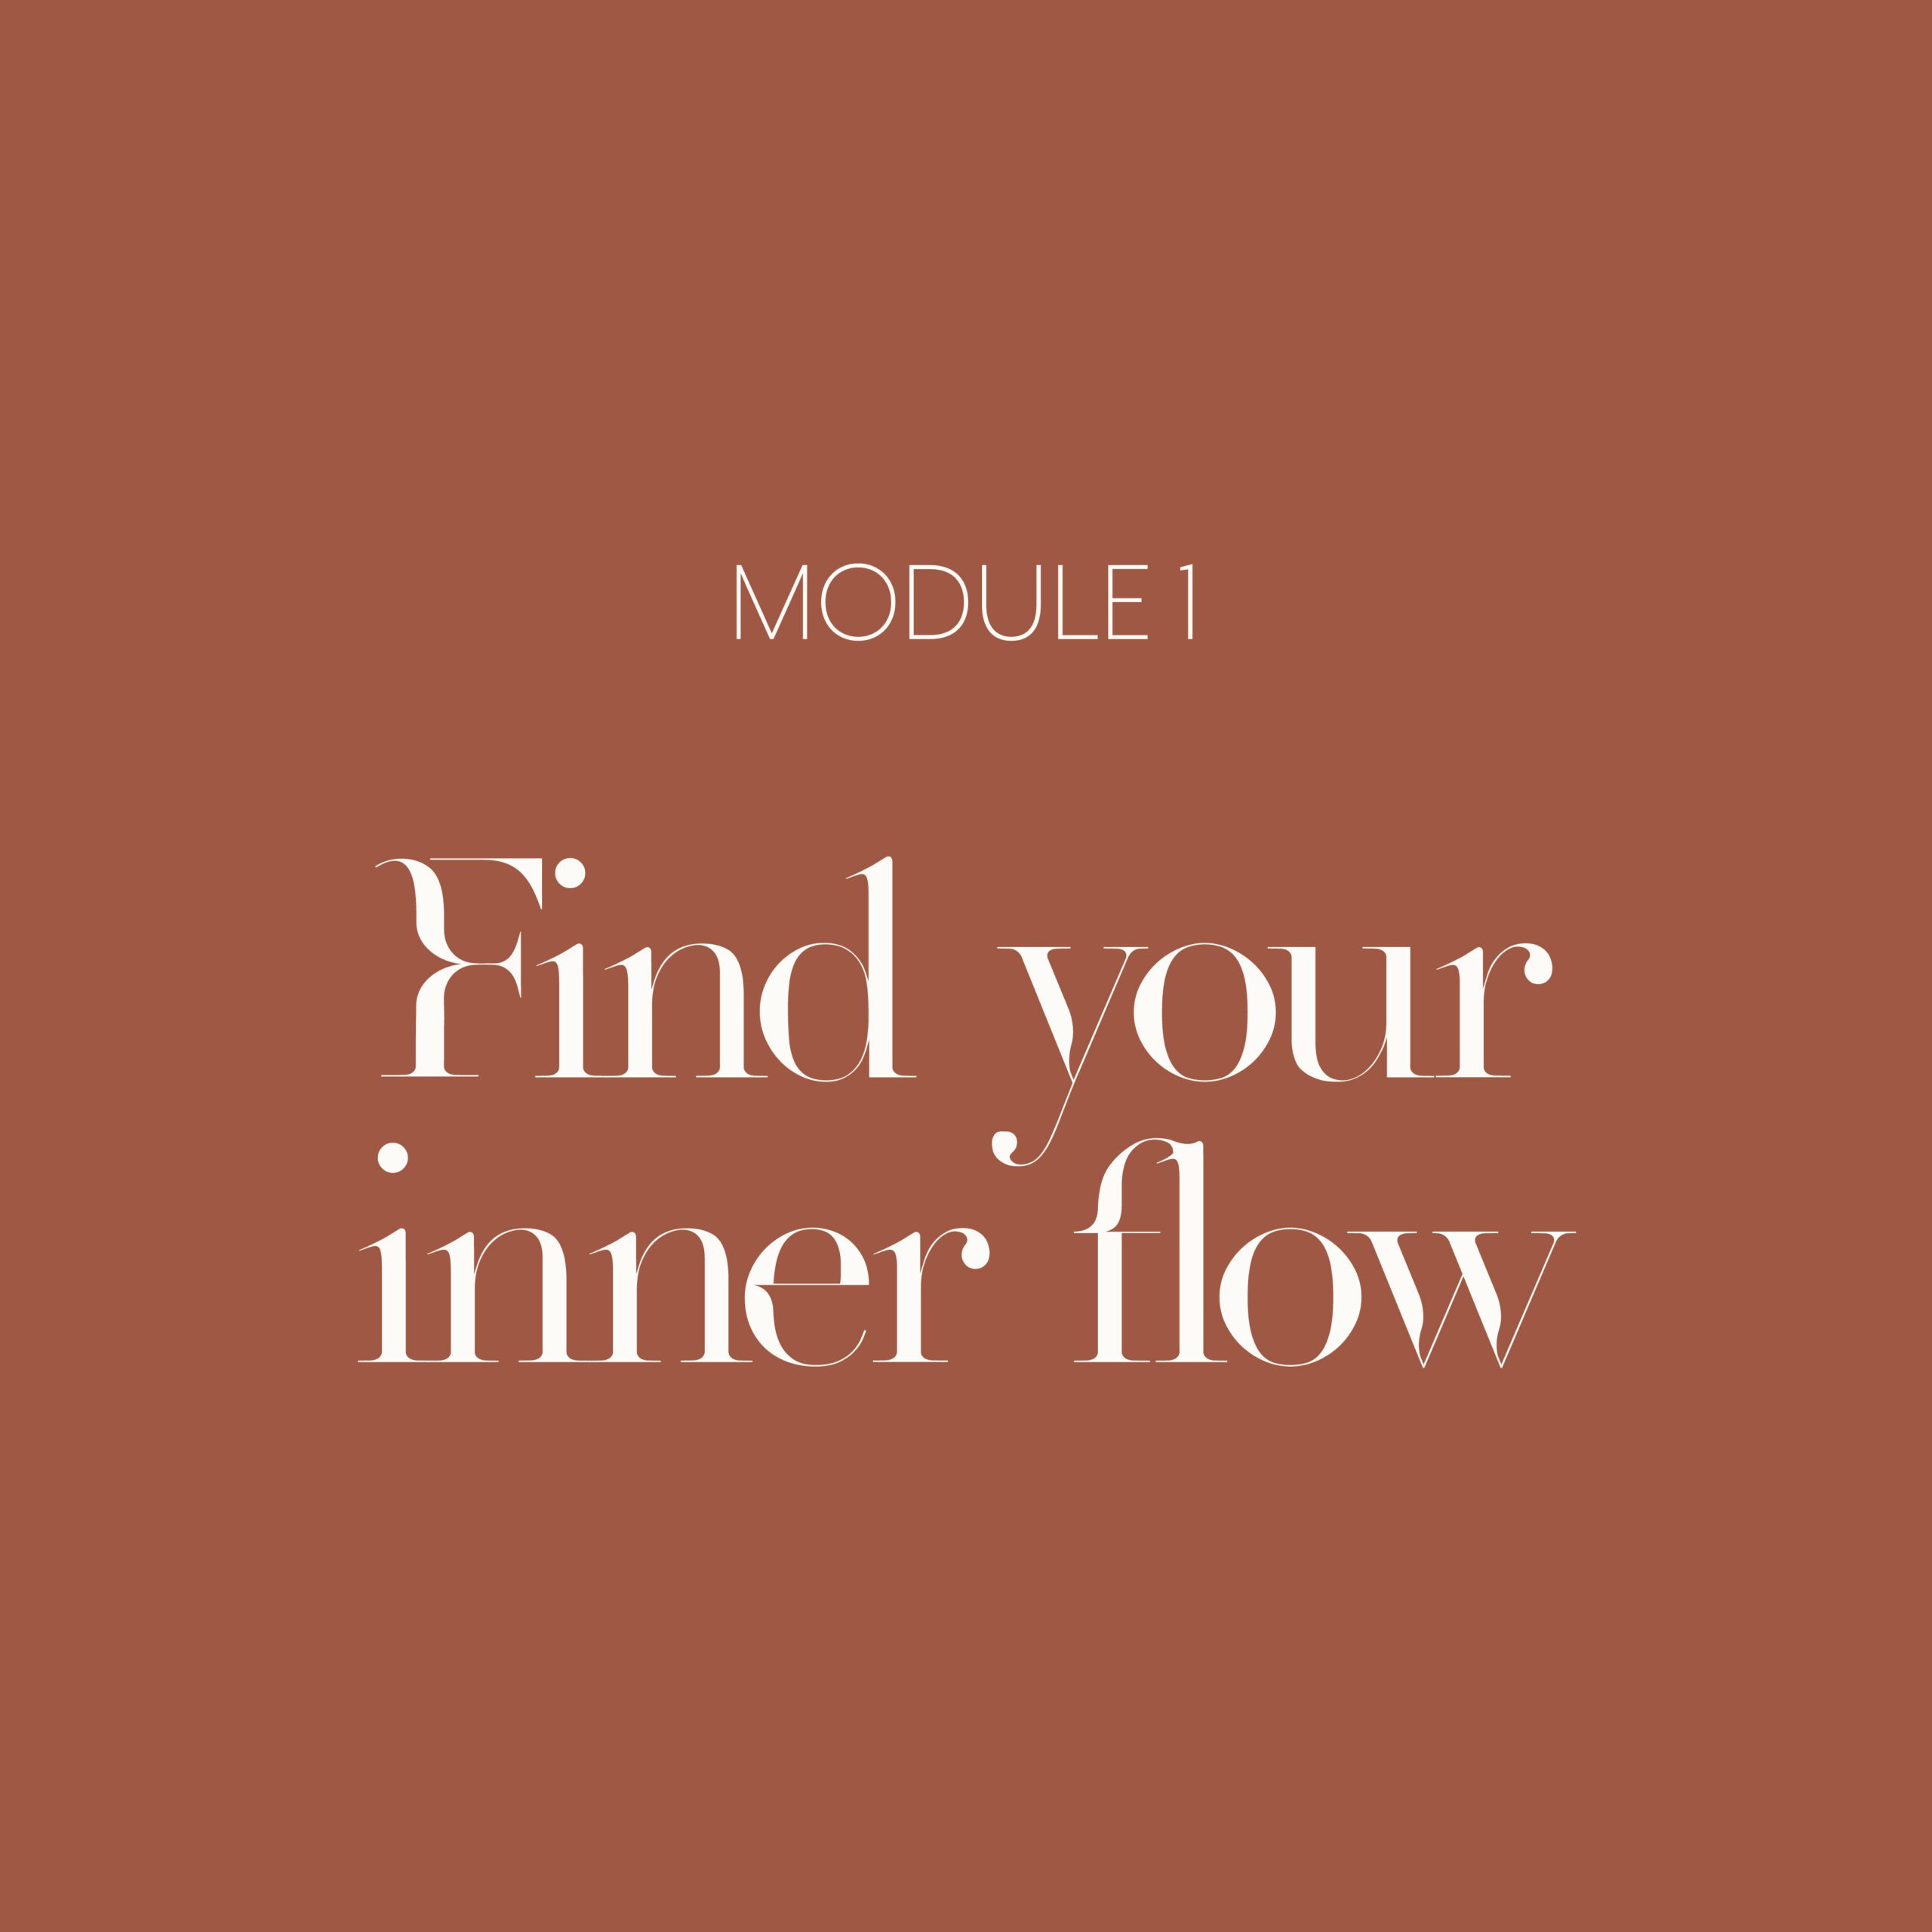 Find your inner flow